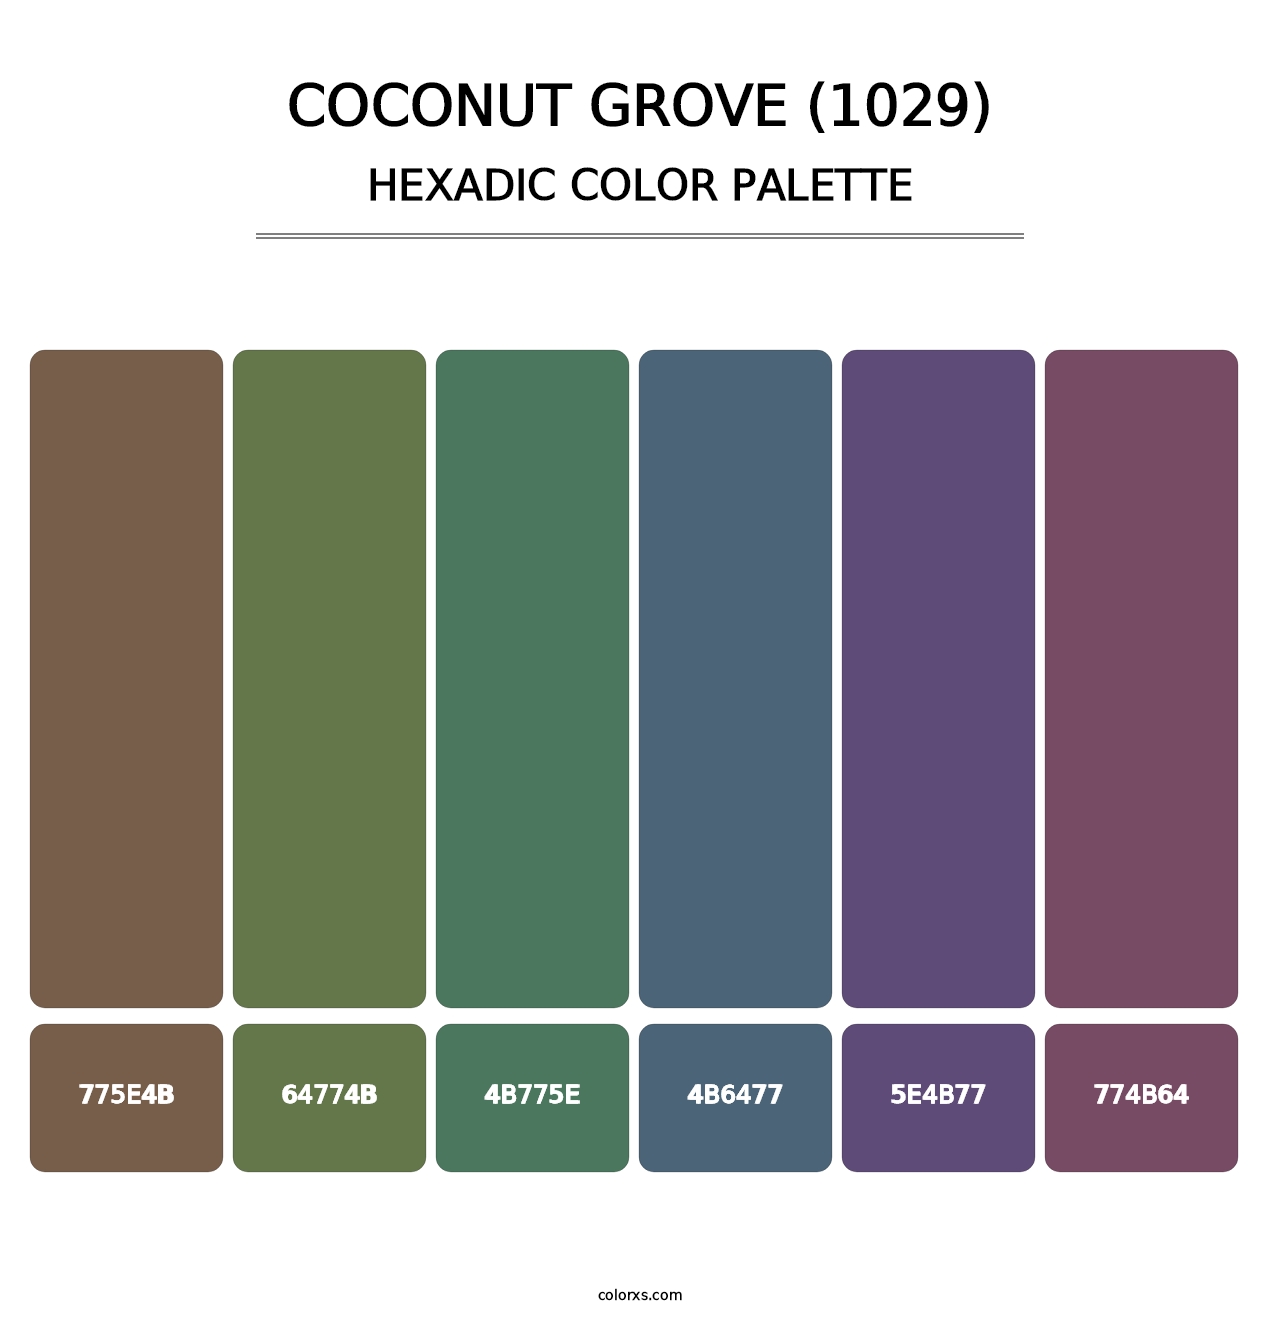 Coconut Grove (1029) - Hexadic Color Palette